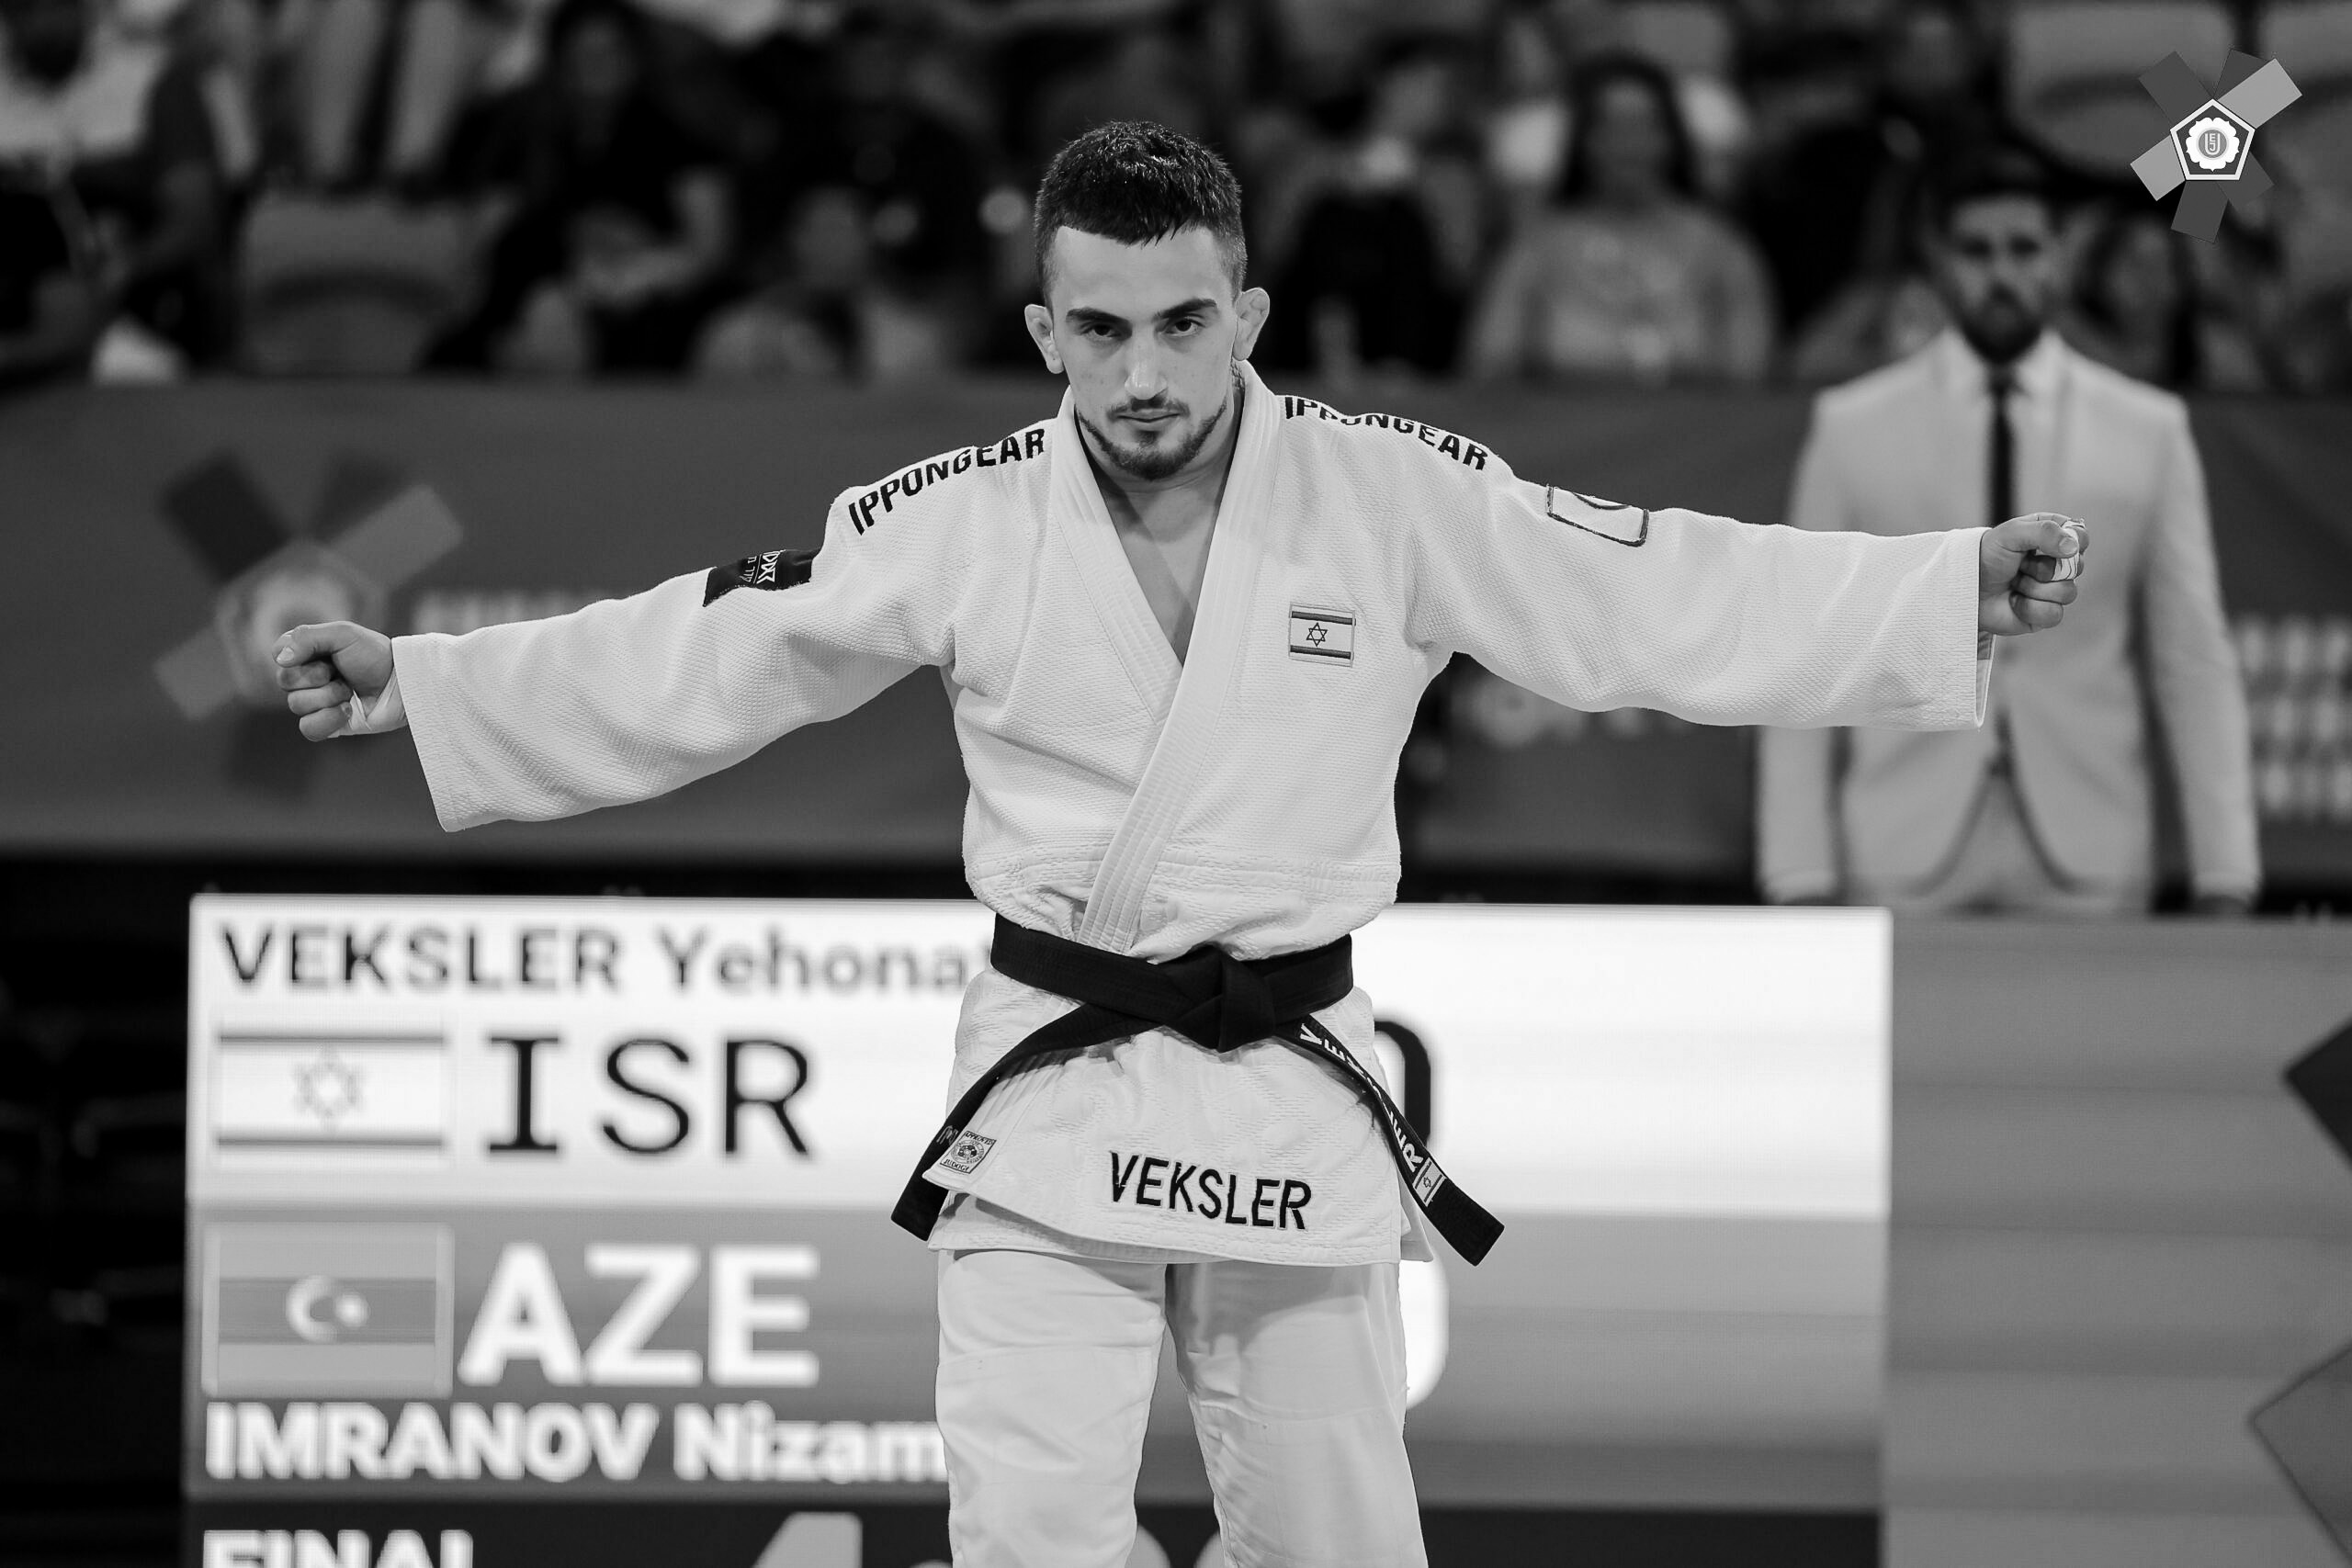 Mag_Judo_EM_The-Hague_Yehonatan-Veksler_silver